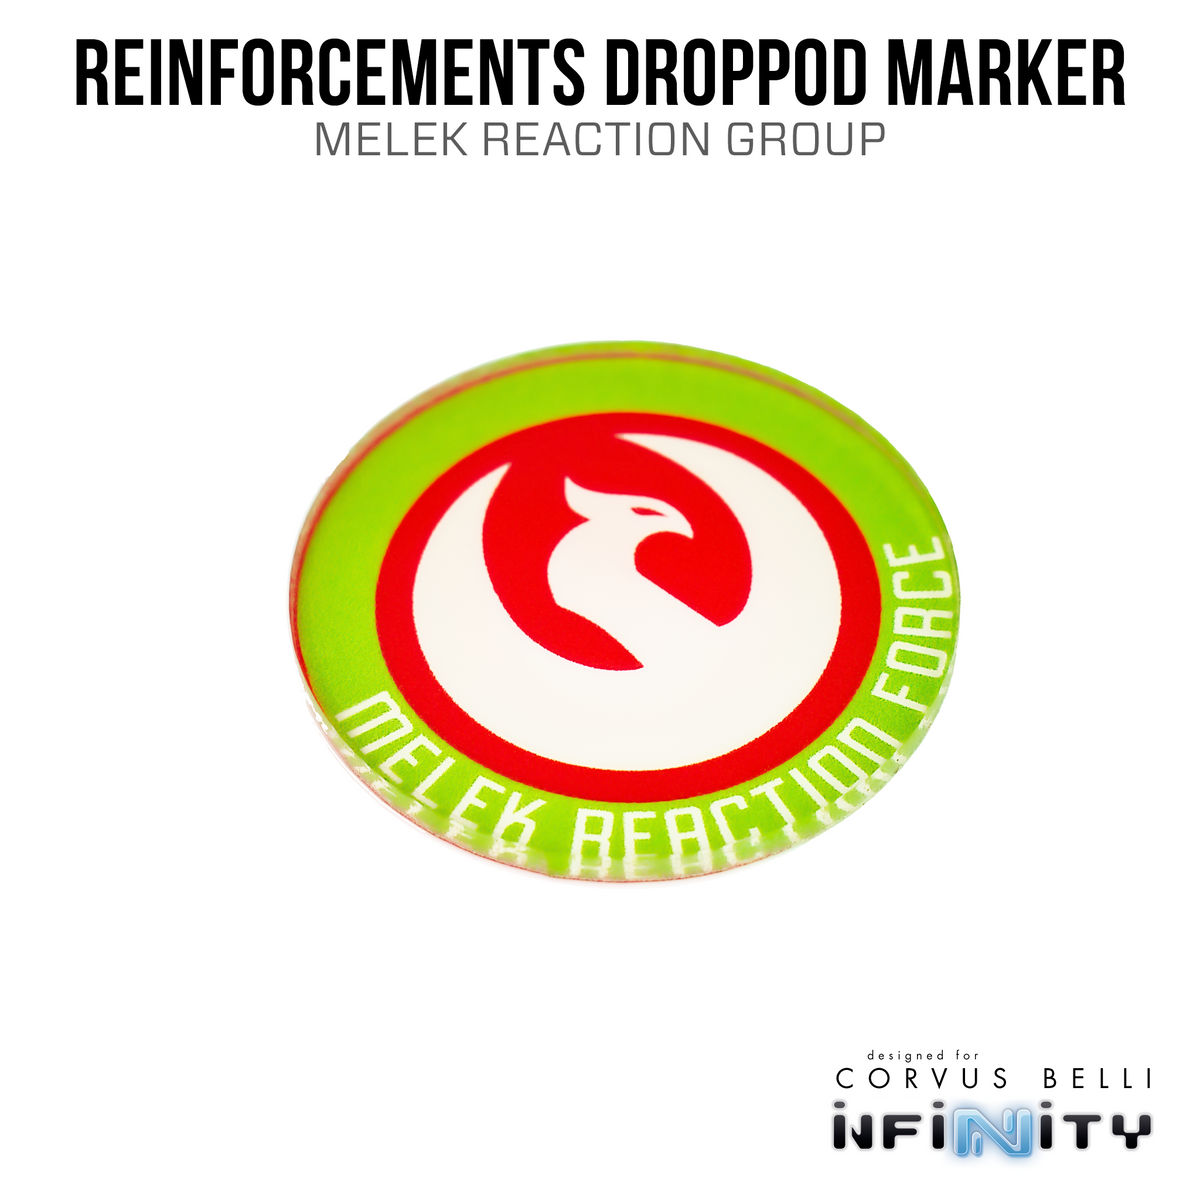 Reinforcements DropPod Marker (Melek Reaction Group)